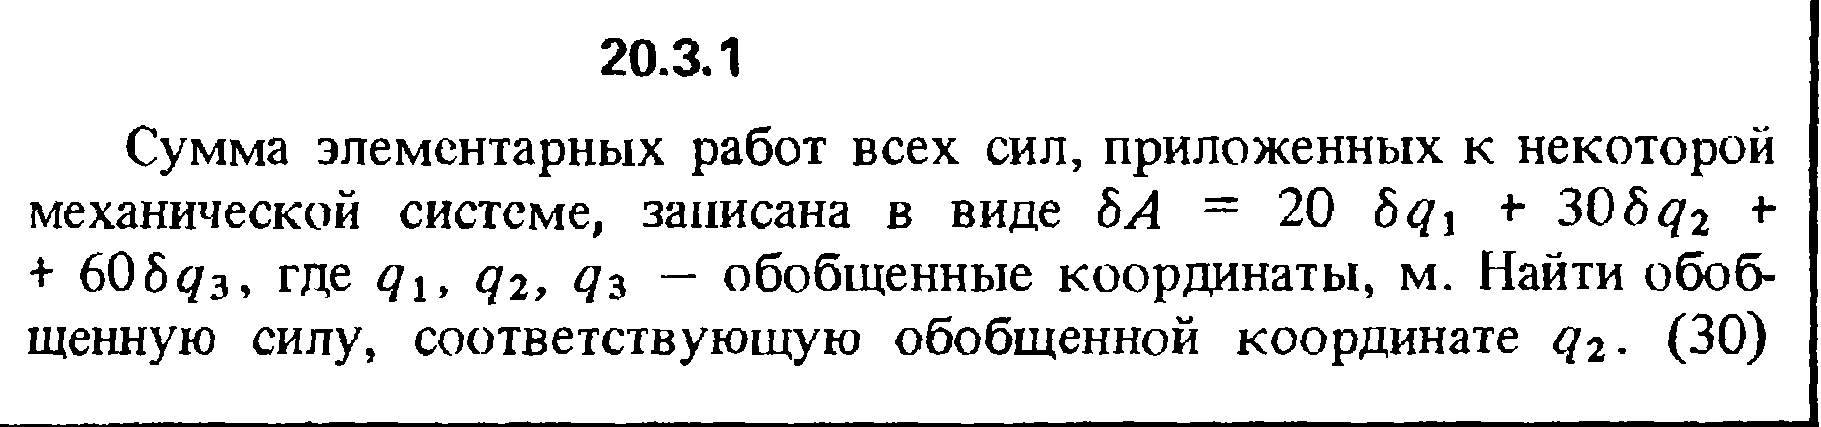 Решение 20.3.1 из сборника (решебника) Кепе О.Е. 1989